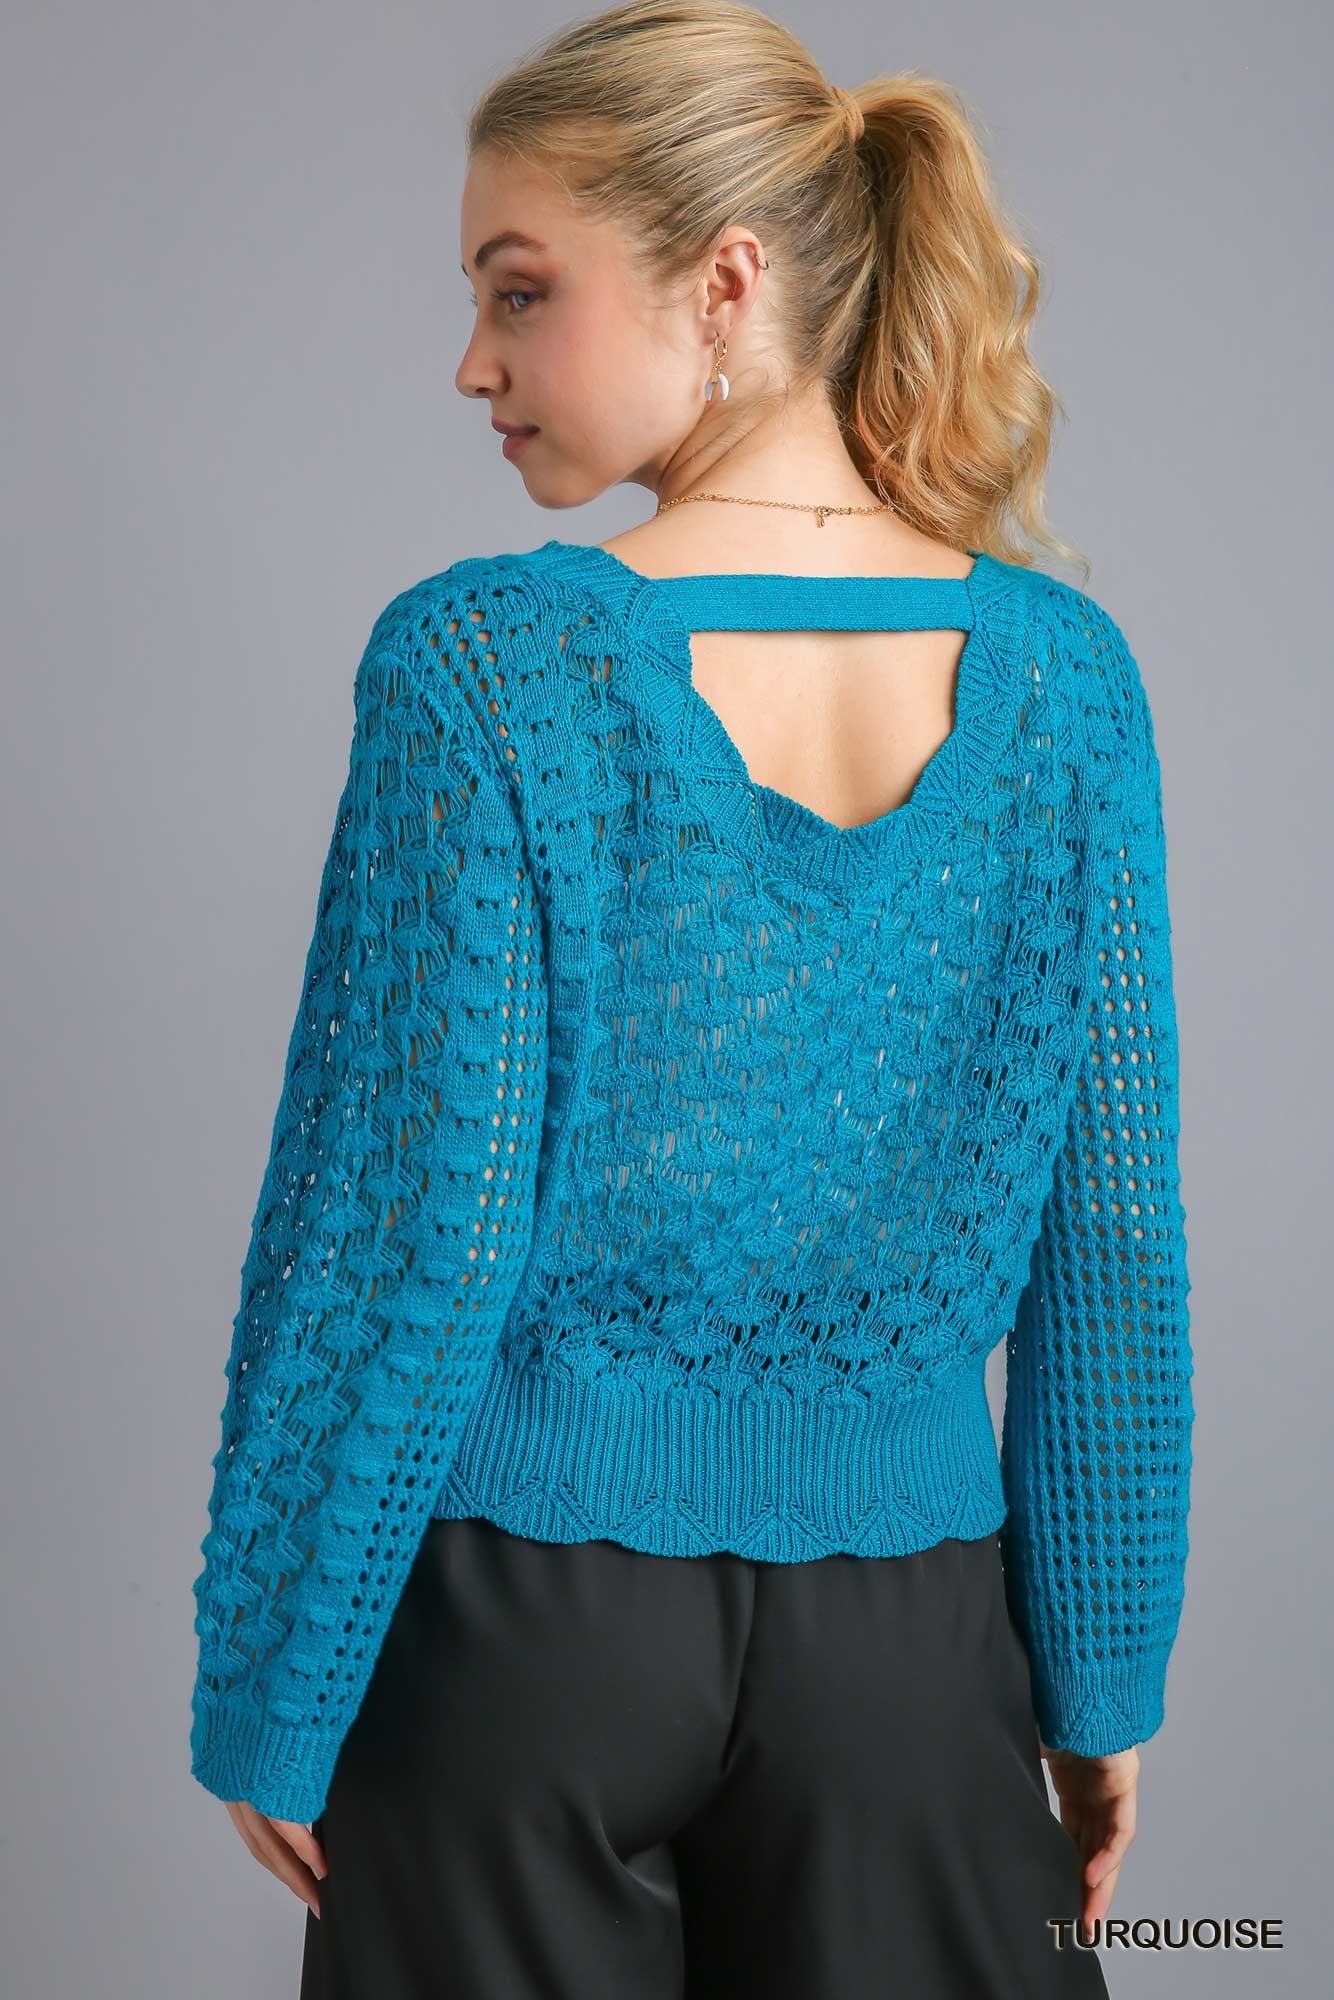 Umgee Crochet Light Weight Back Strap Pullover Sweater